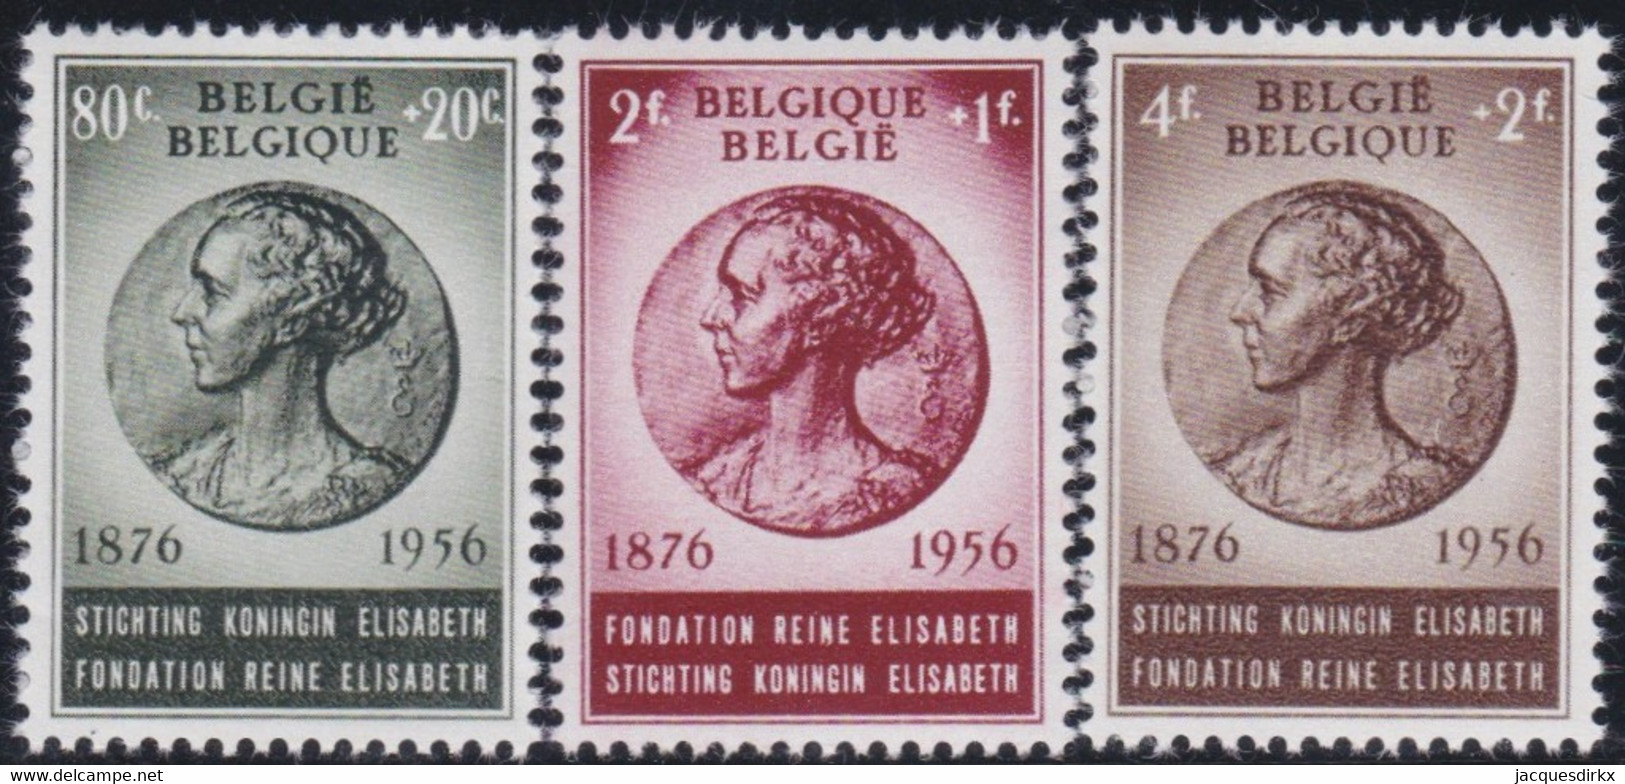 Belgie   .   OBP  .   991/993     .   **    .   Postfris     .  /  .   Neuf  SANS Charnière - Unused Stamps